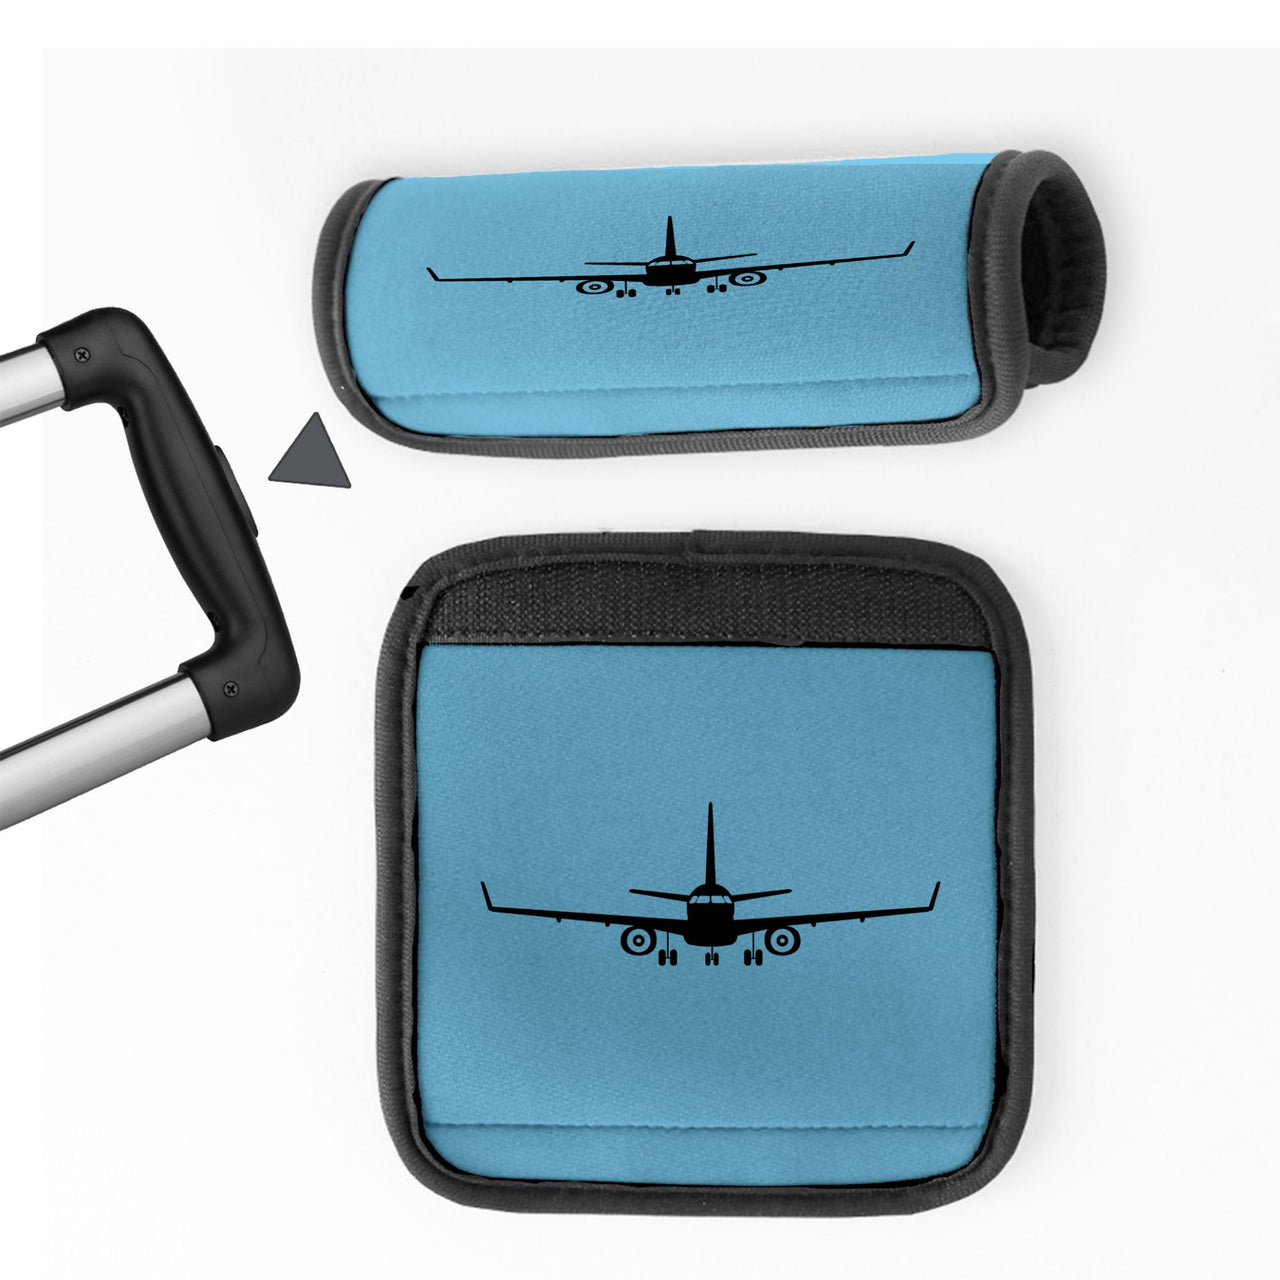 Embraer E-190 Silhouette Plane Designed Neoprene Luggage Handle Covers